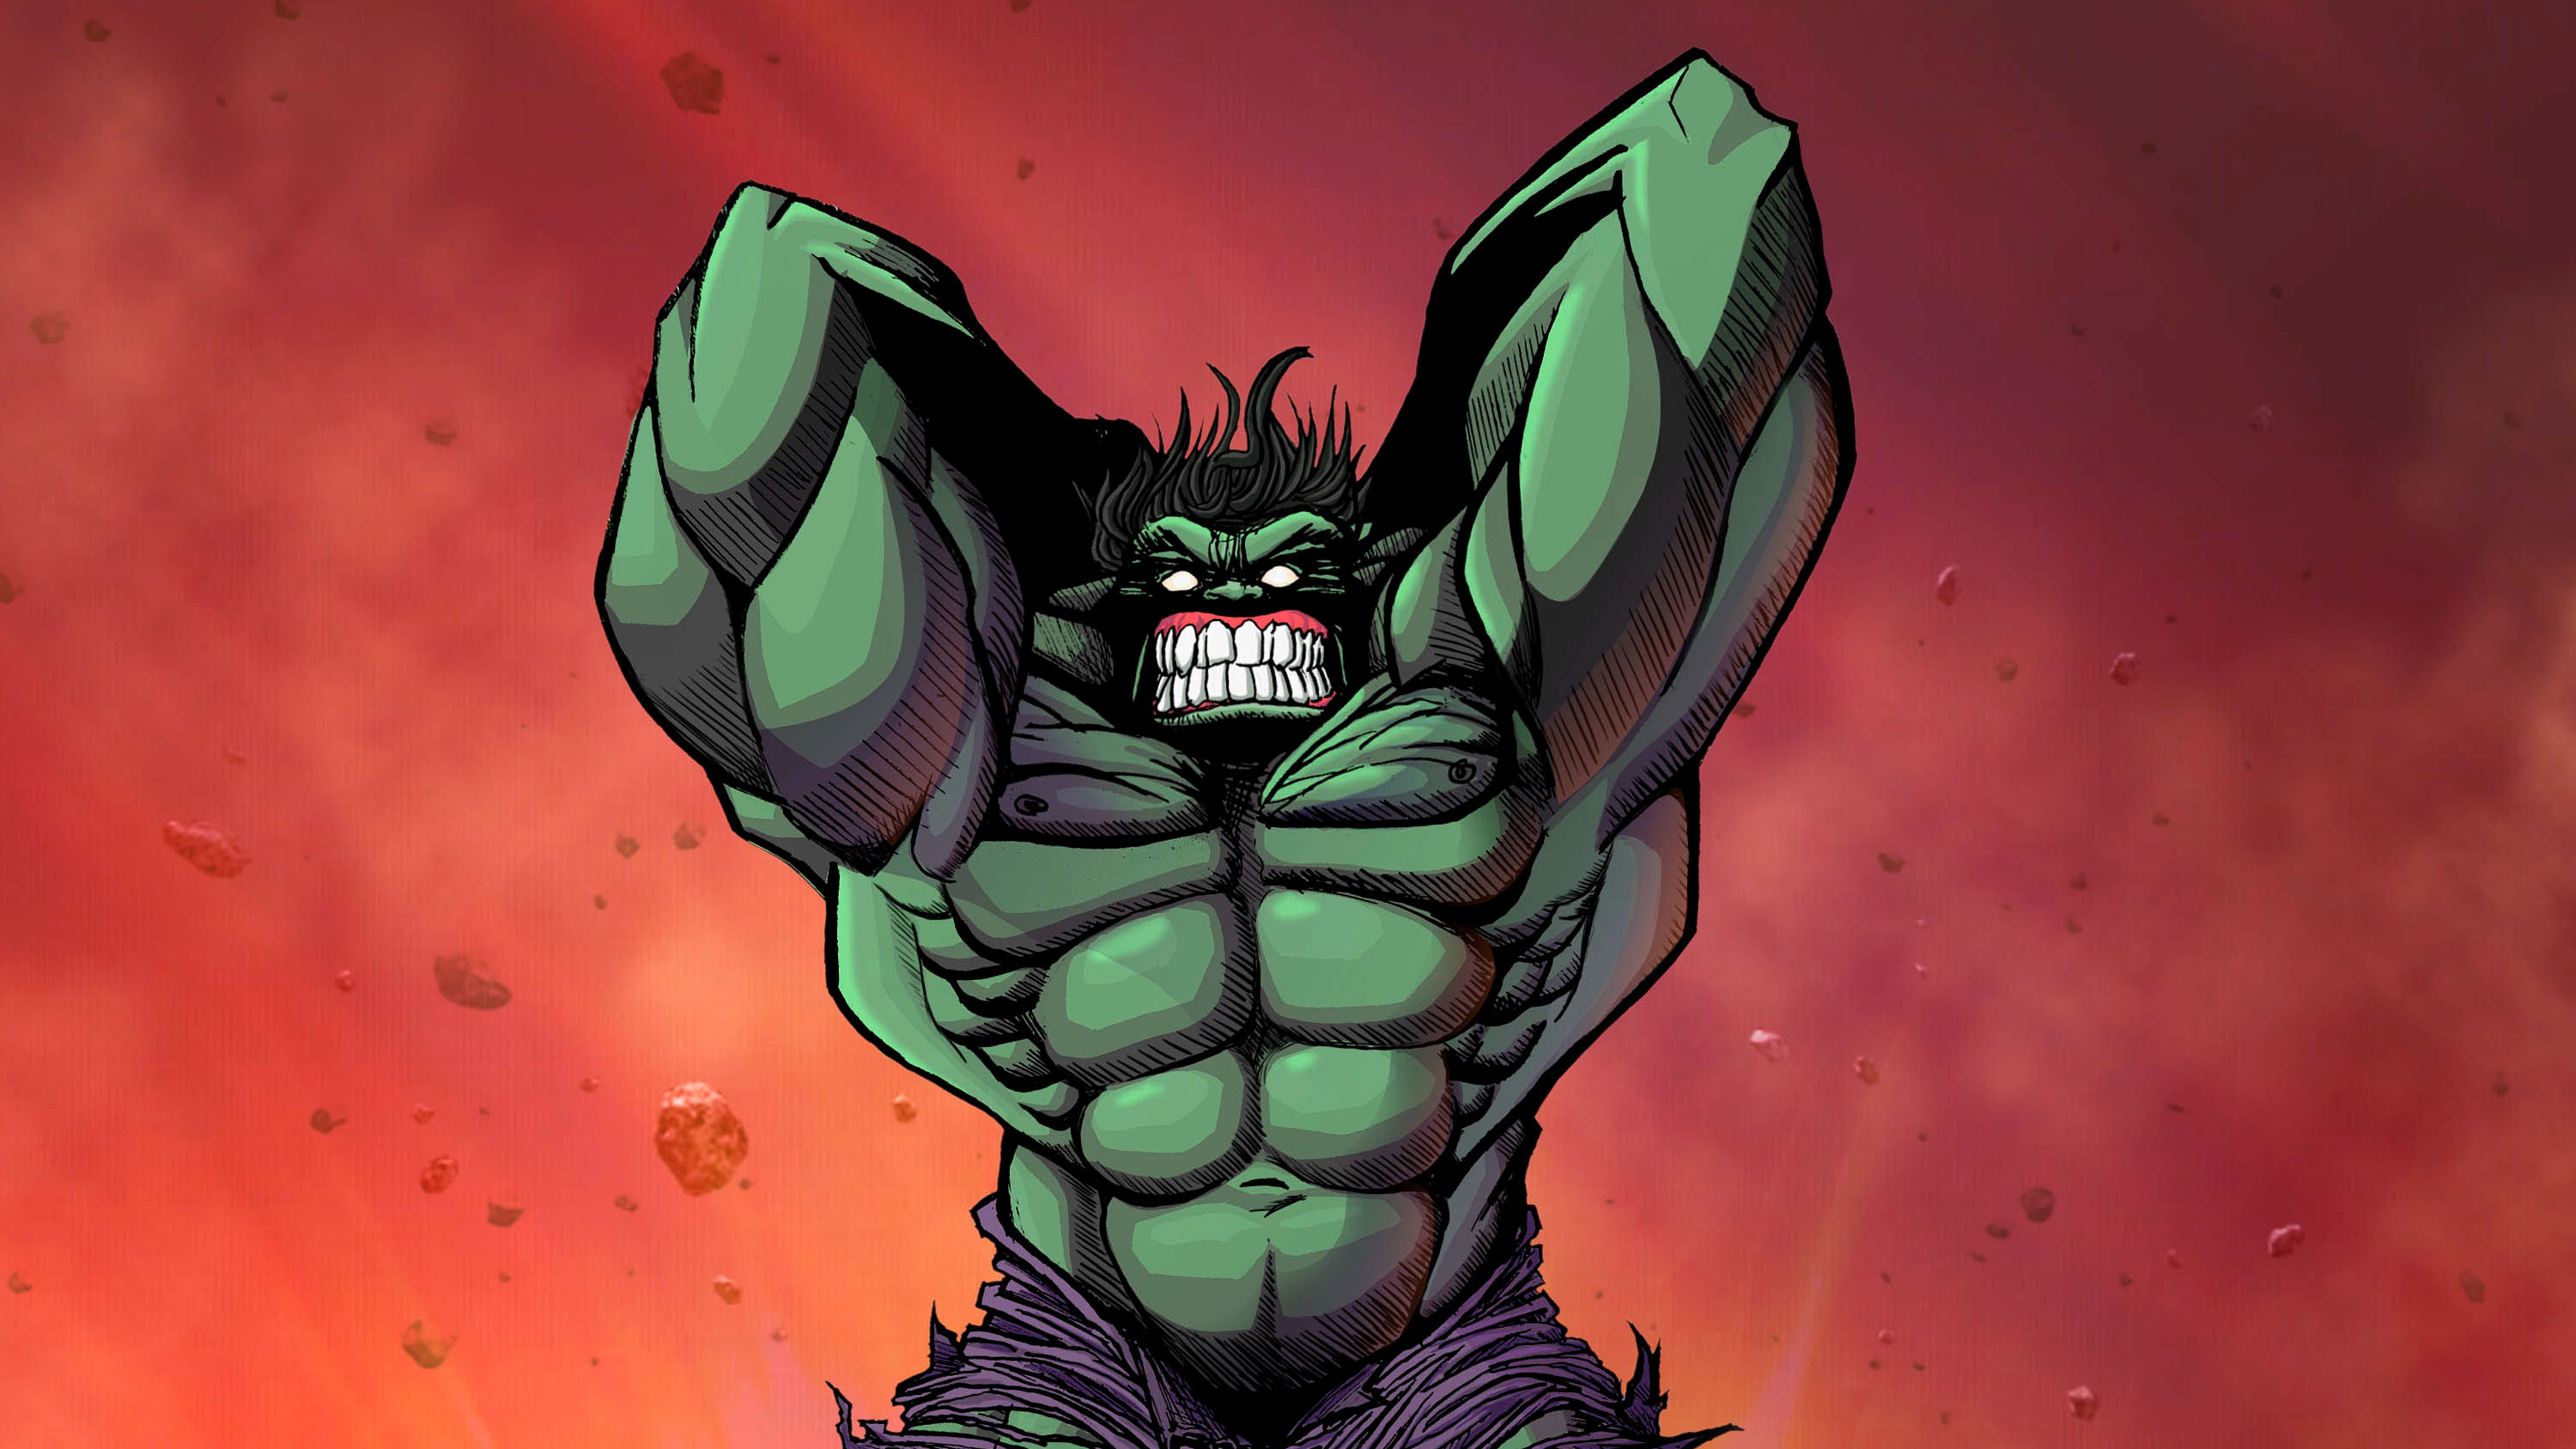 Hulk Comic Art, HD Superheroes, 4k Wallpaper, Image, Background